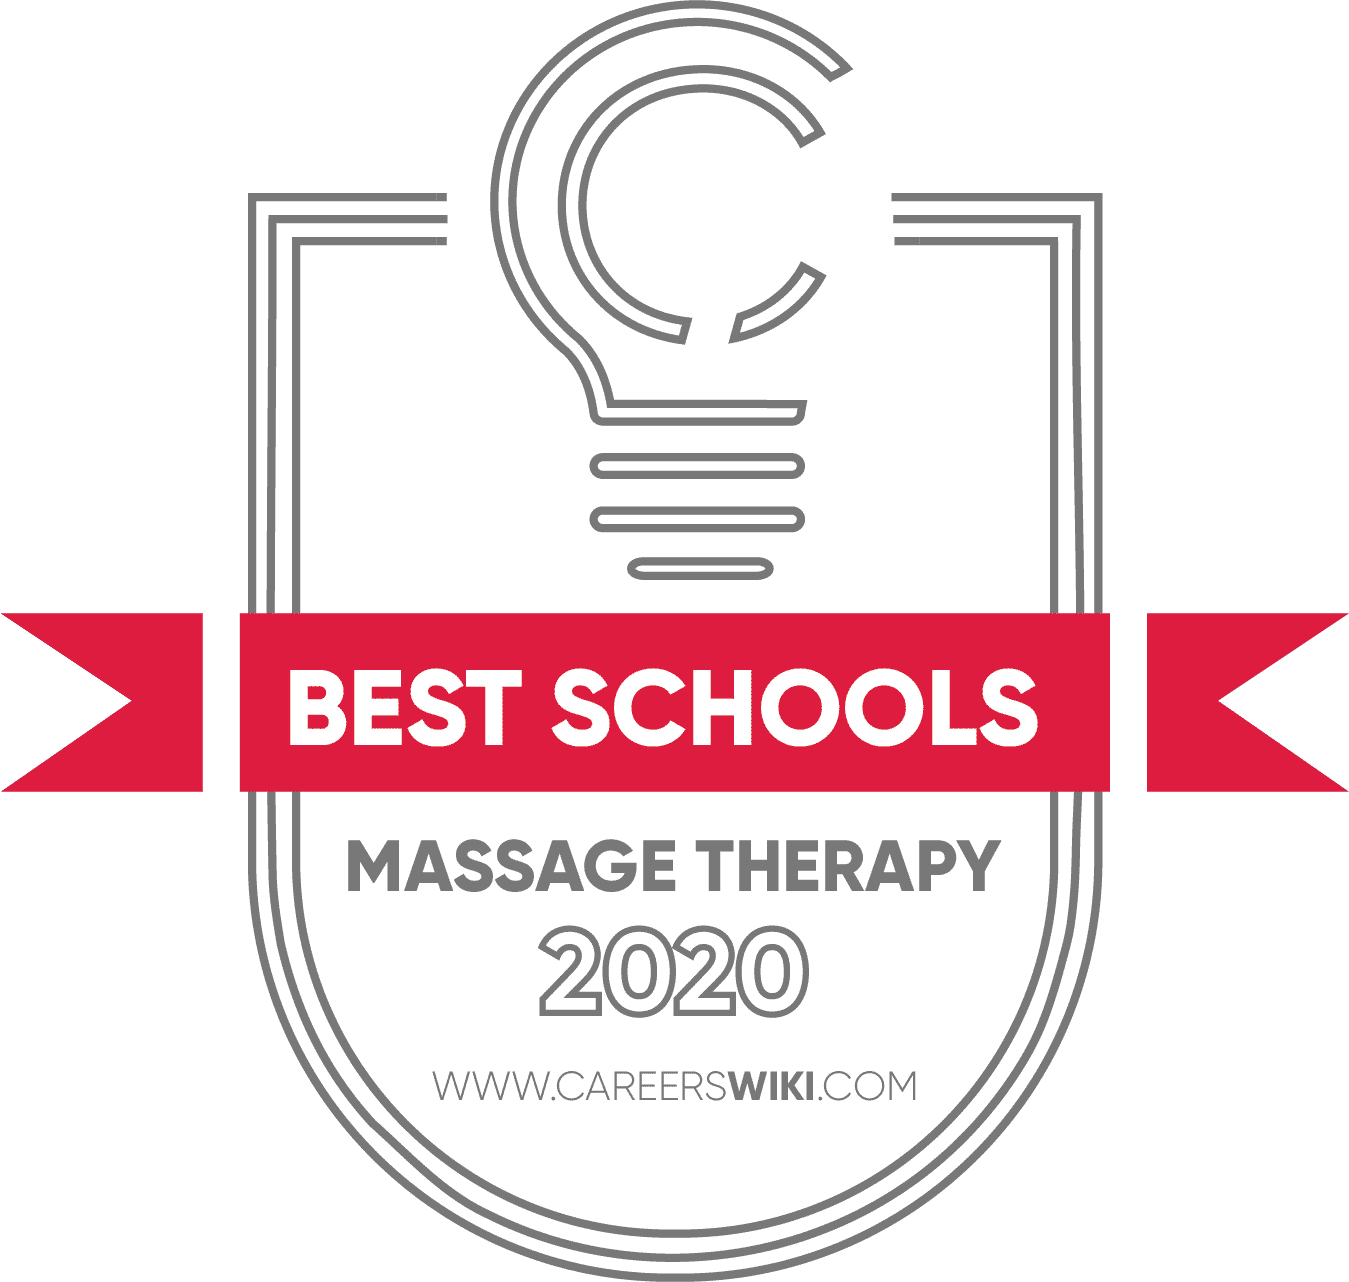 Best Massage Therapy Schools Badge